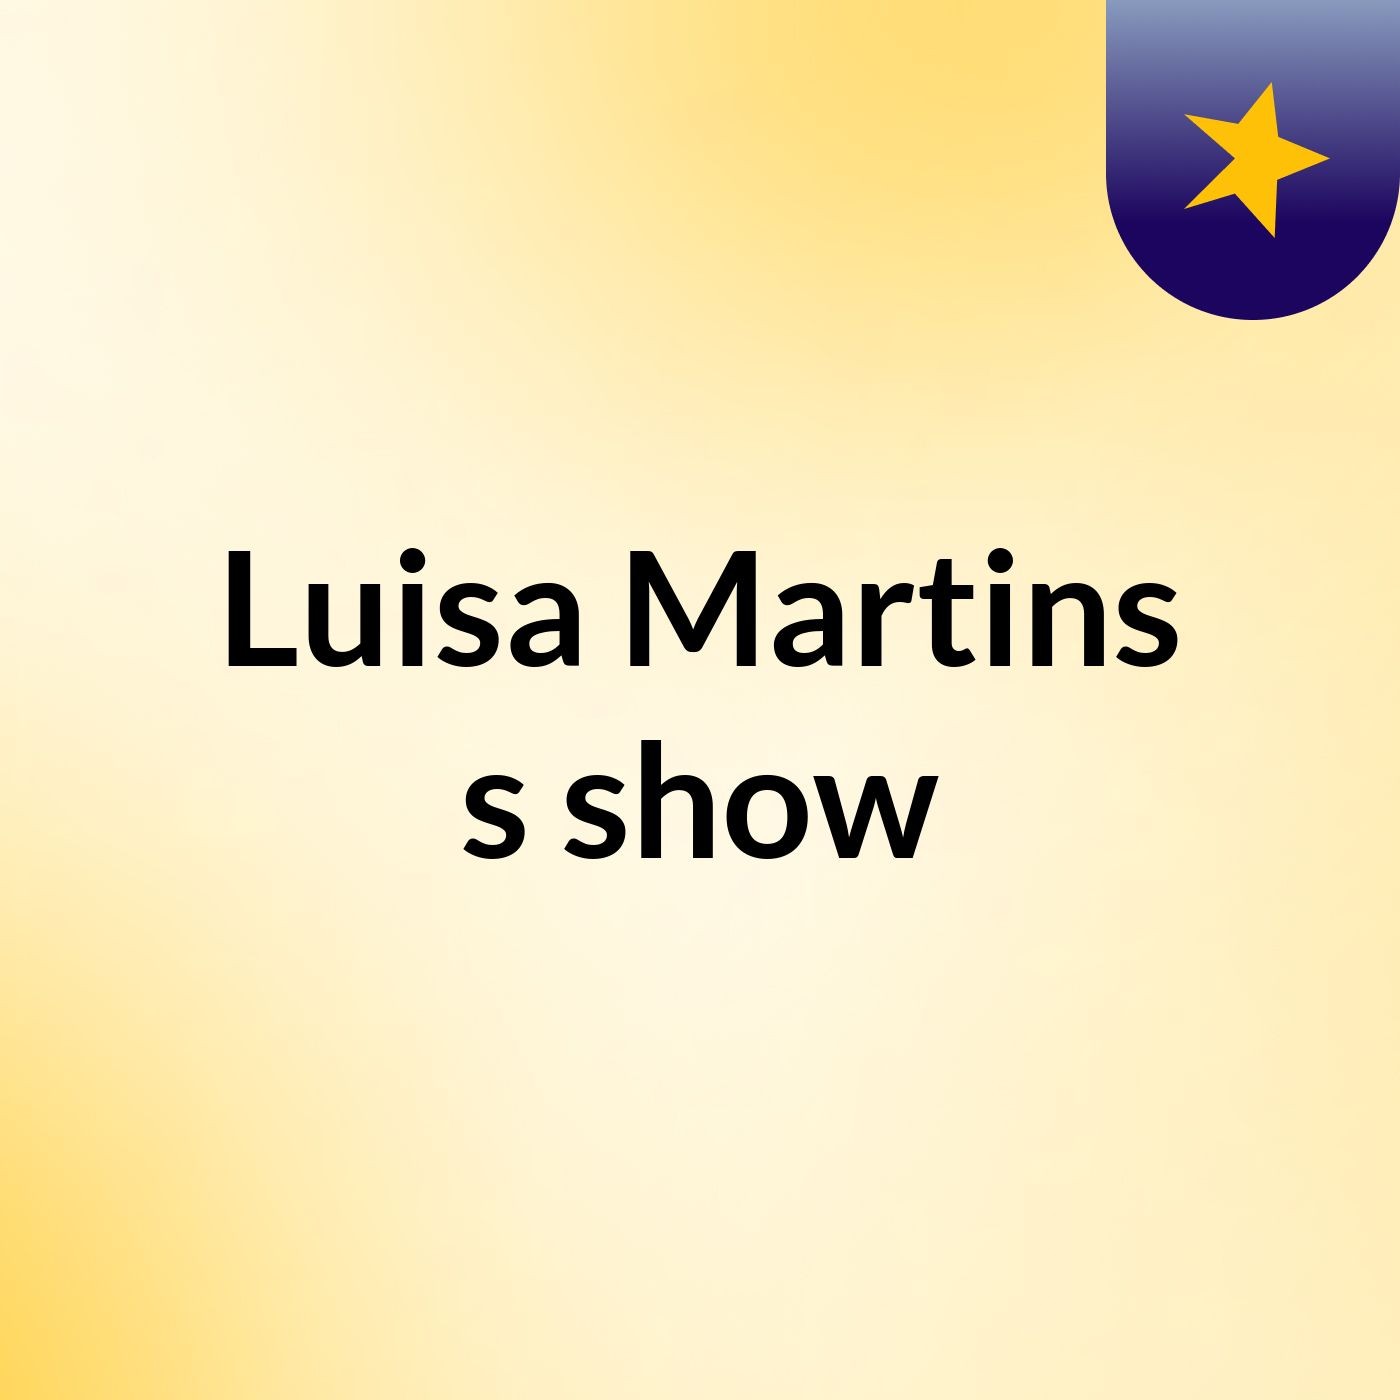 Luisa Martins's show